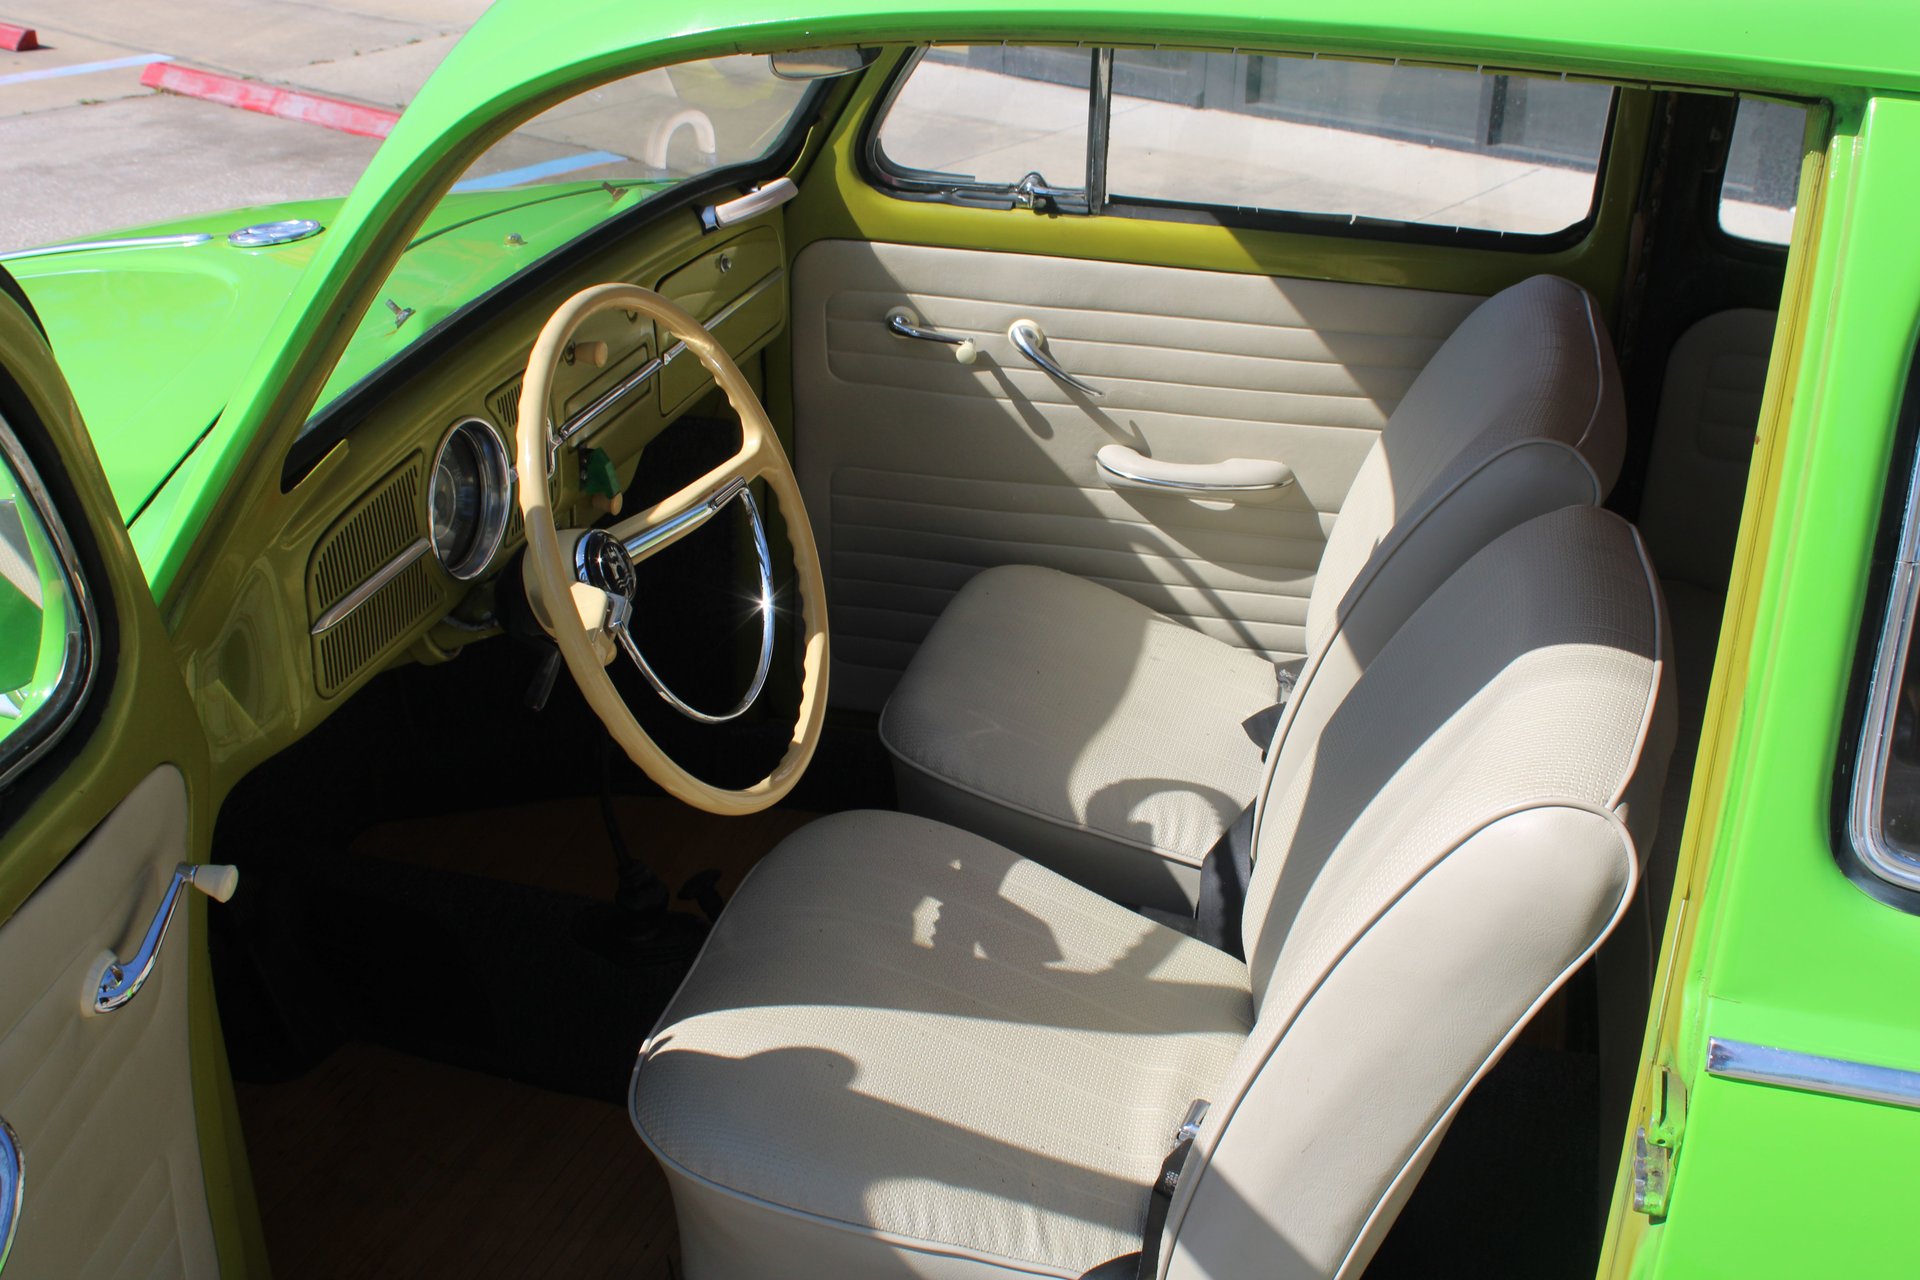 For Sale 1964 Volkswagon Beetle